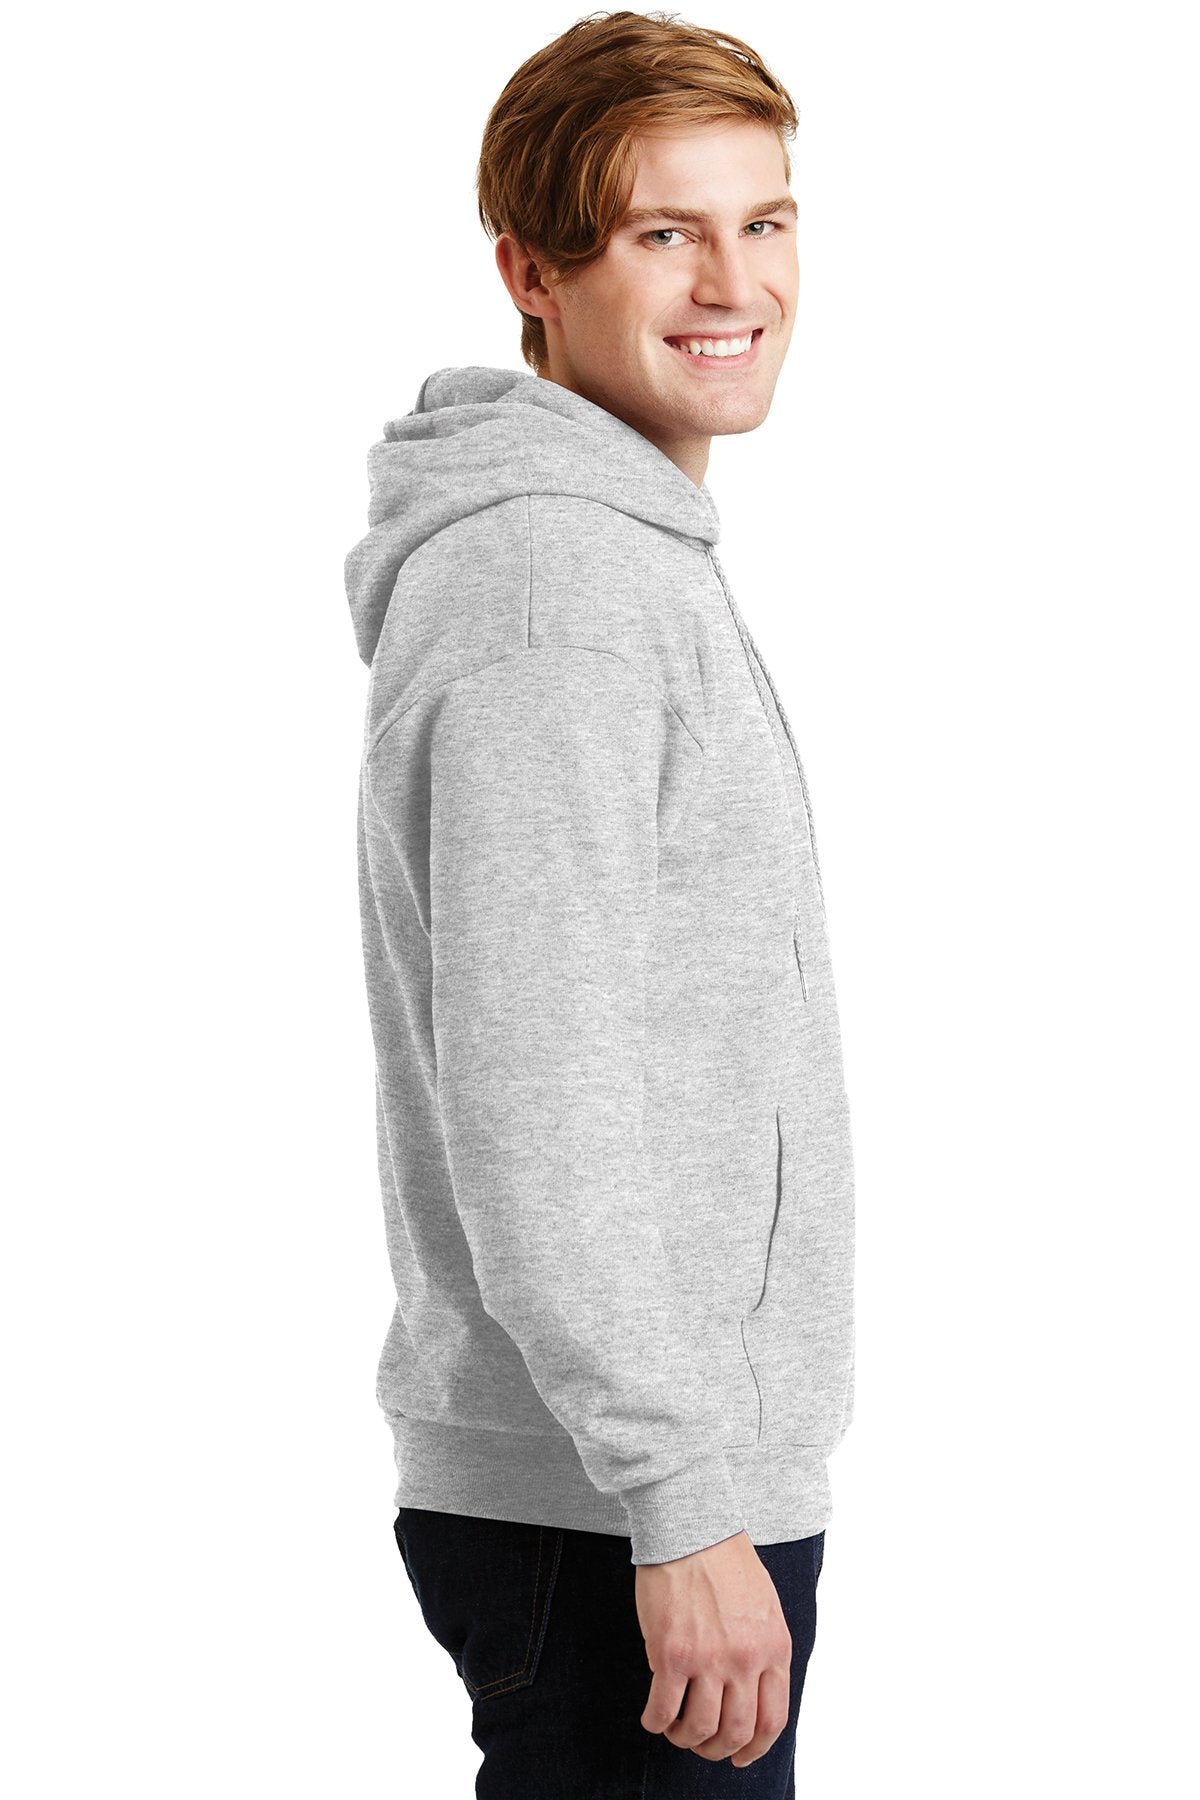 Hanes Ecosmart Pullover Hooded Sweatshirt P170 Ash